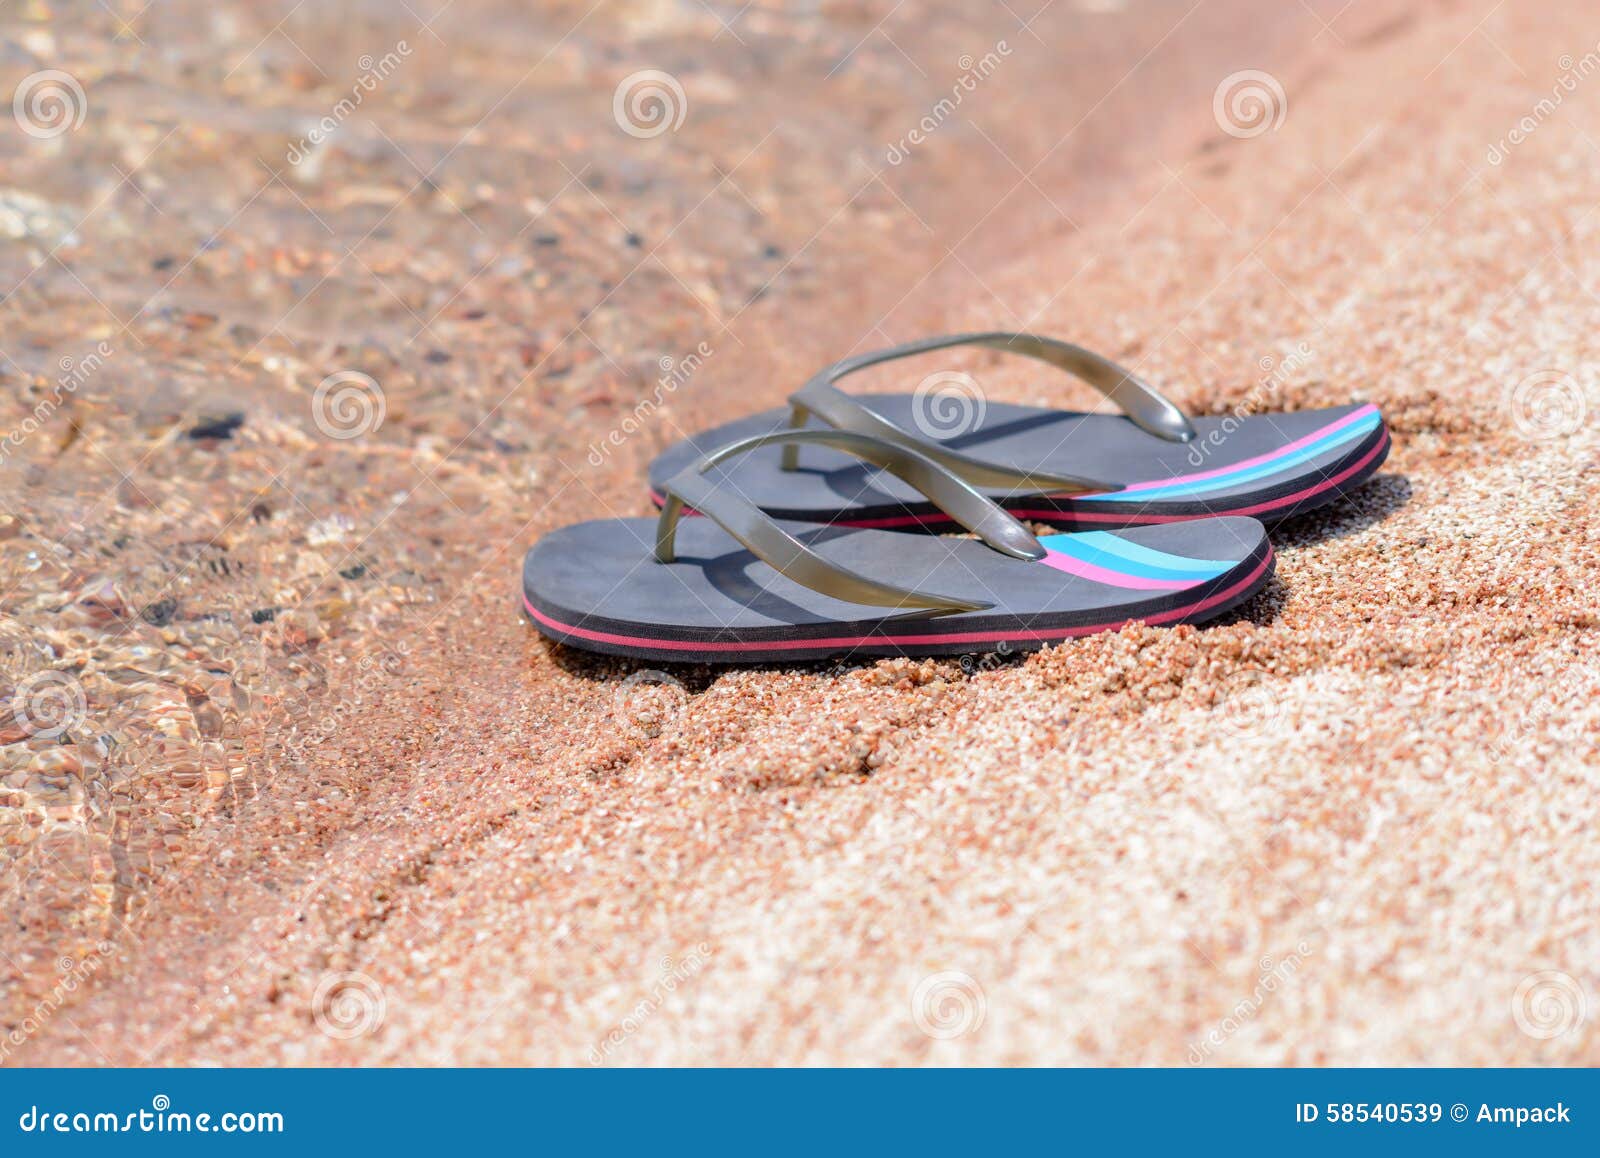 Pair of Flip Flops on Sandy Beach Shore Stock Image - Image of sandals ...